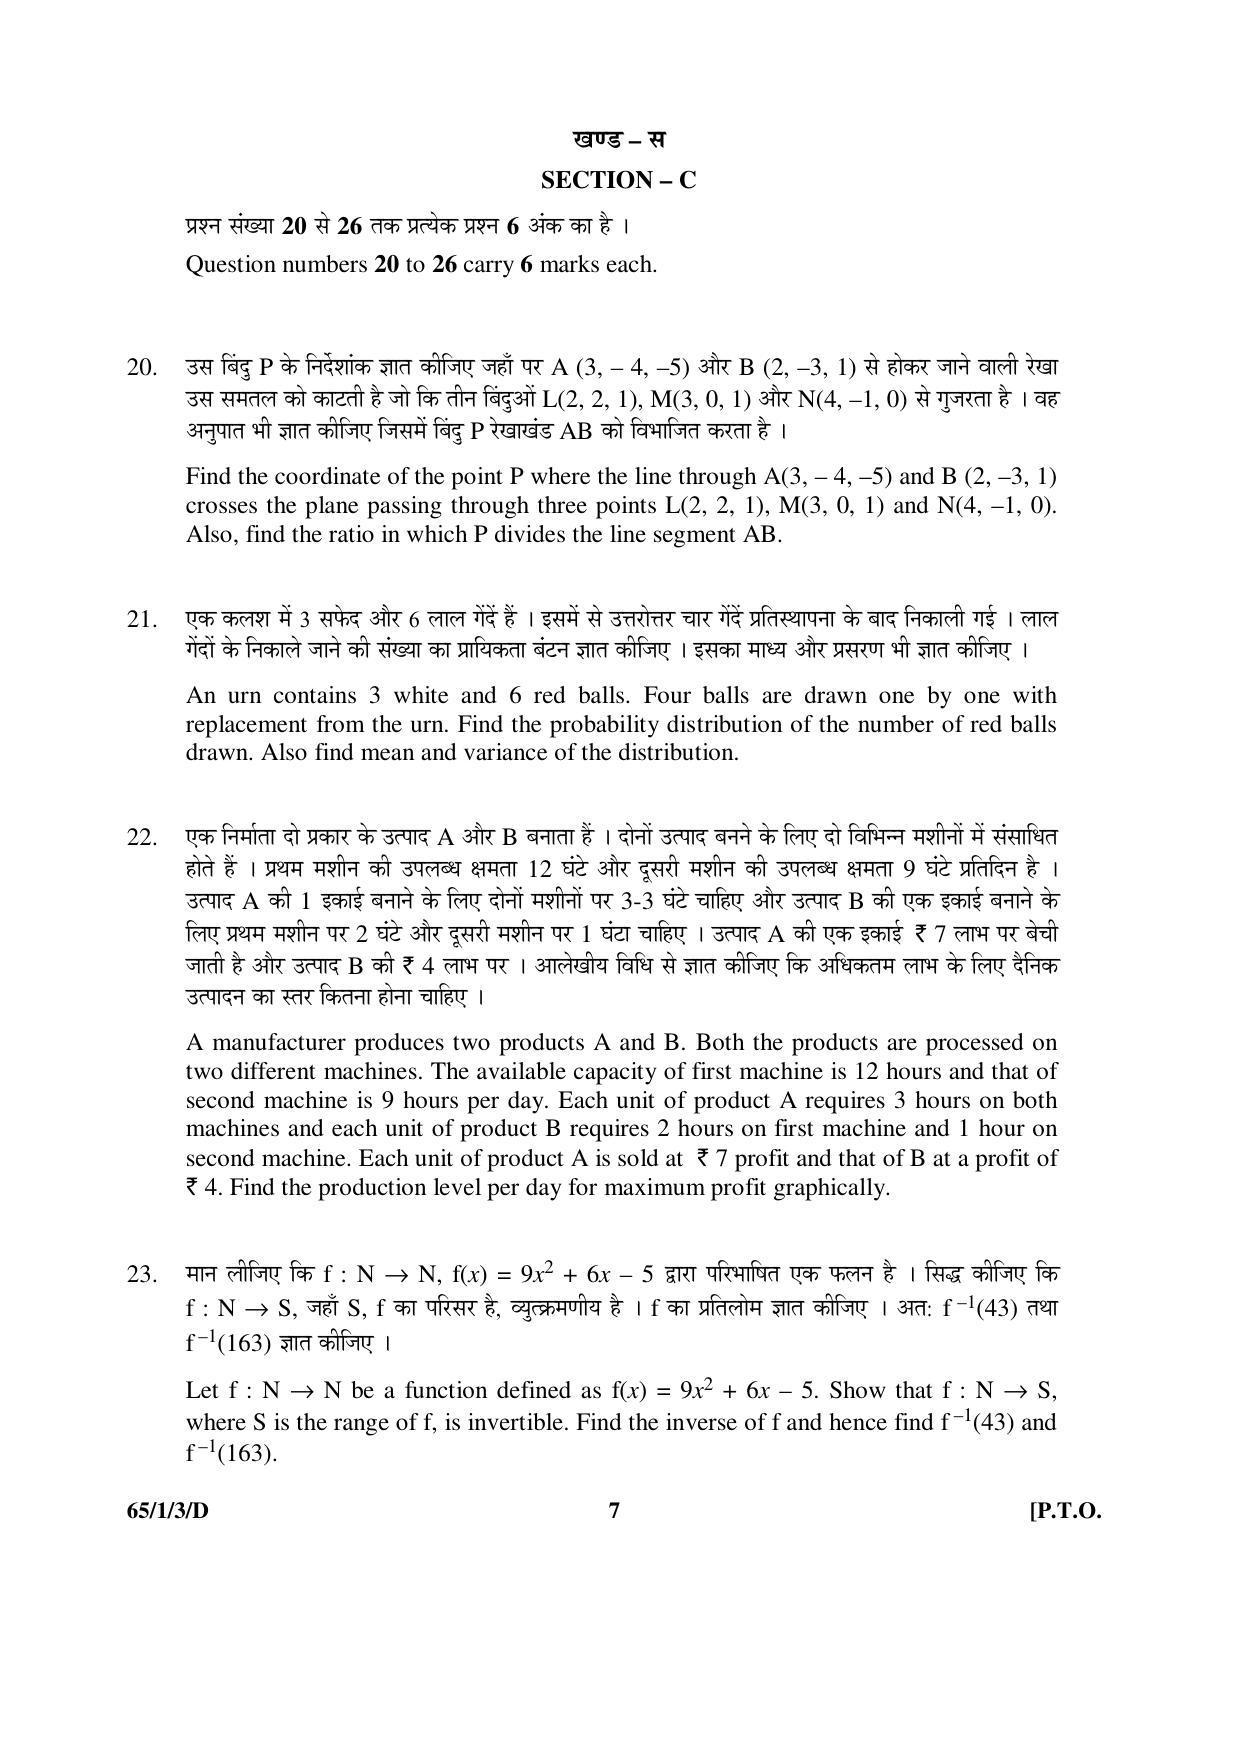 CBSE Class 12 65-1-3-D MATHEMATICS 2016 Question Paper - Page 7